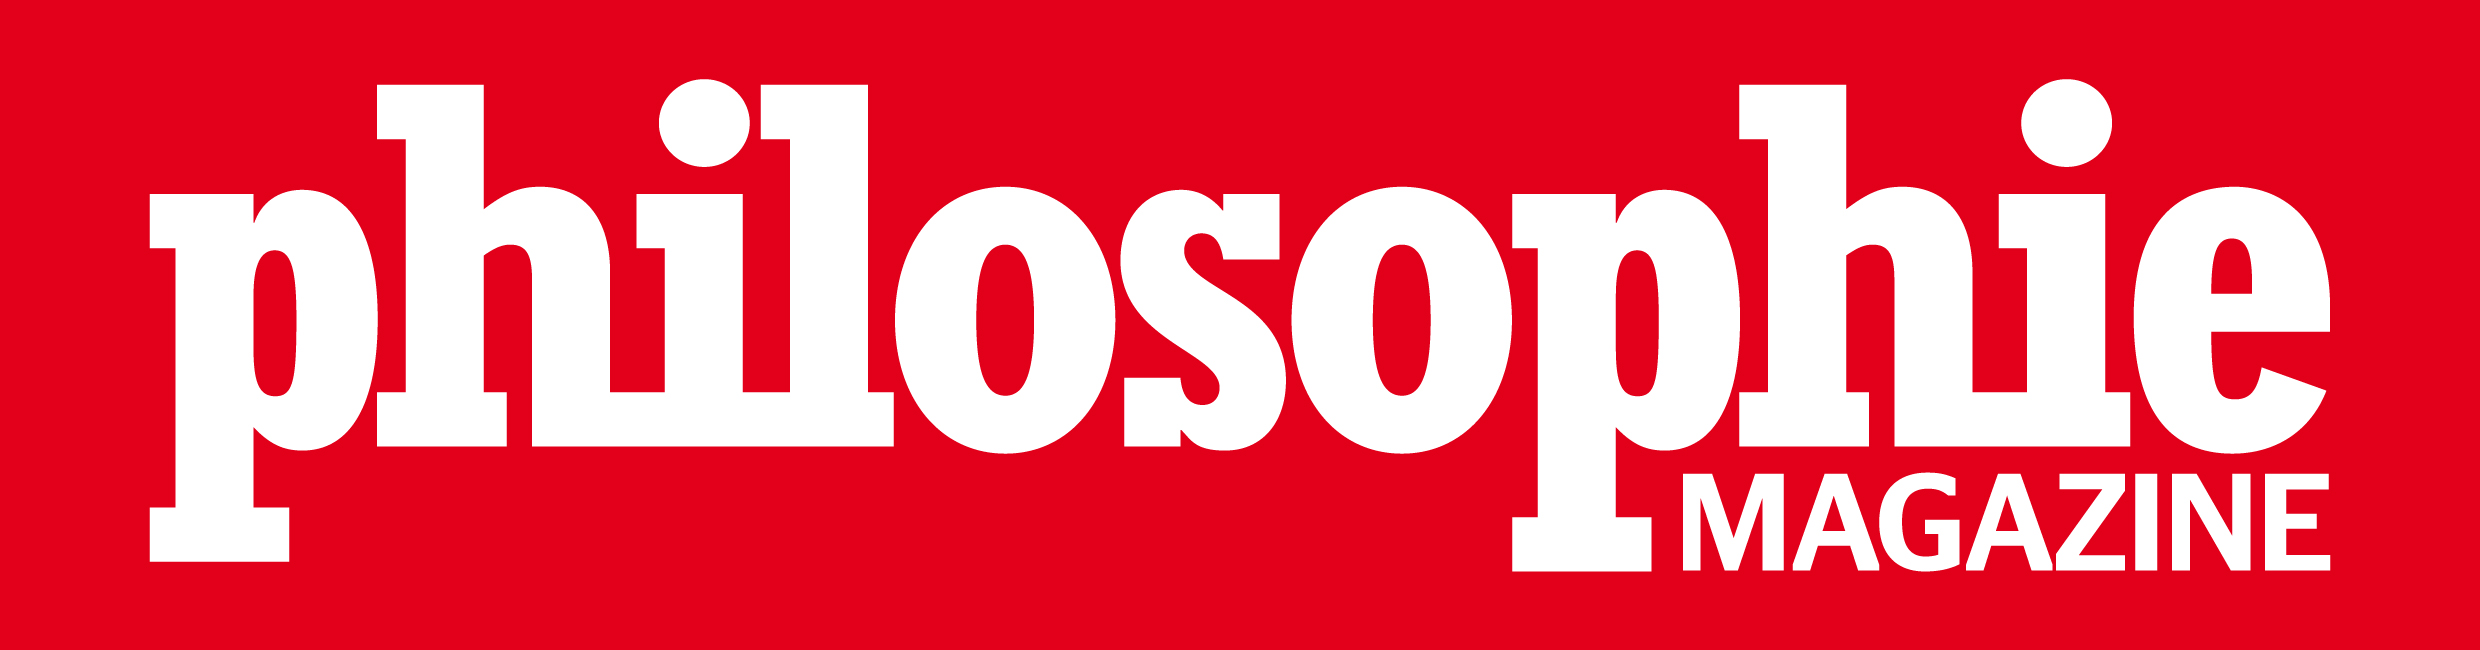 logo philosophie magazine